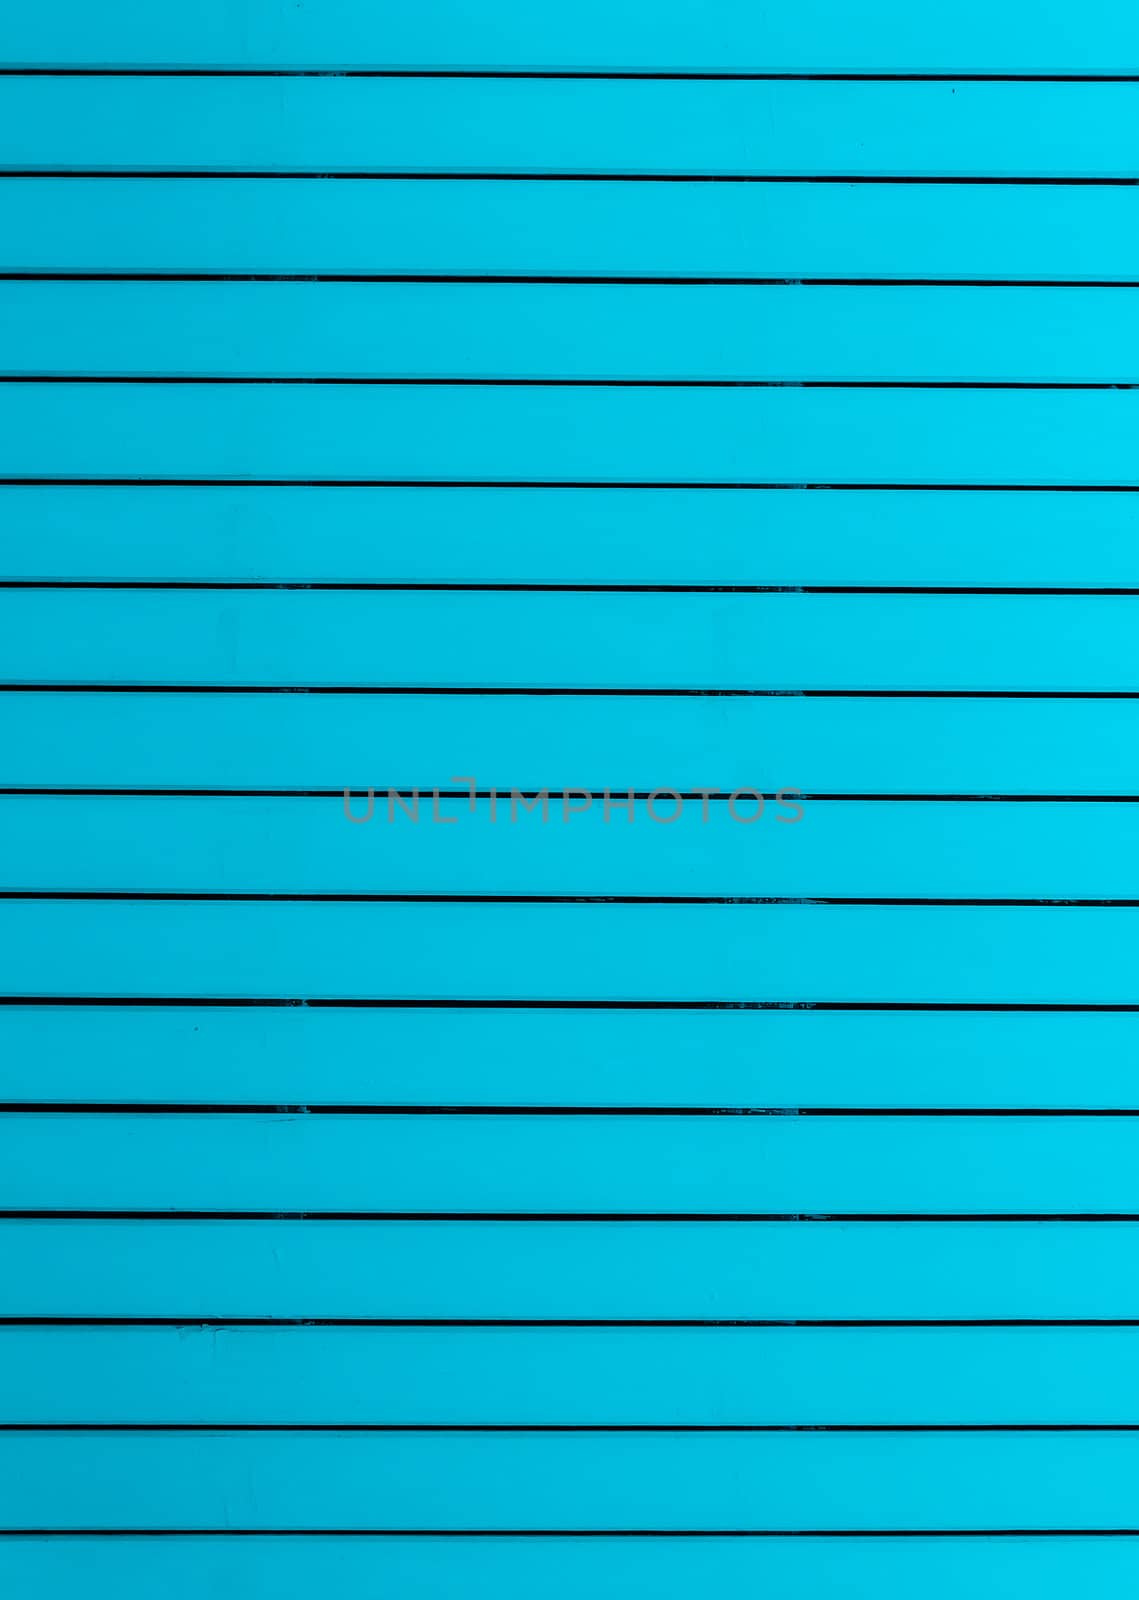 Blue Painted Wood Background, Horizontal Pattern by punpleng